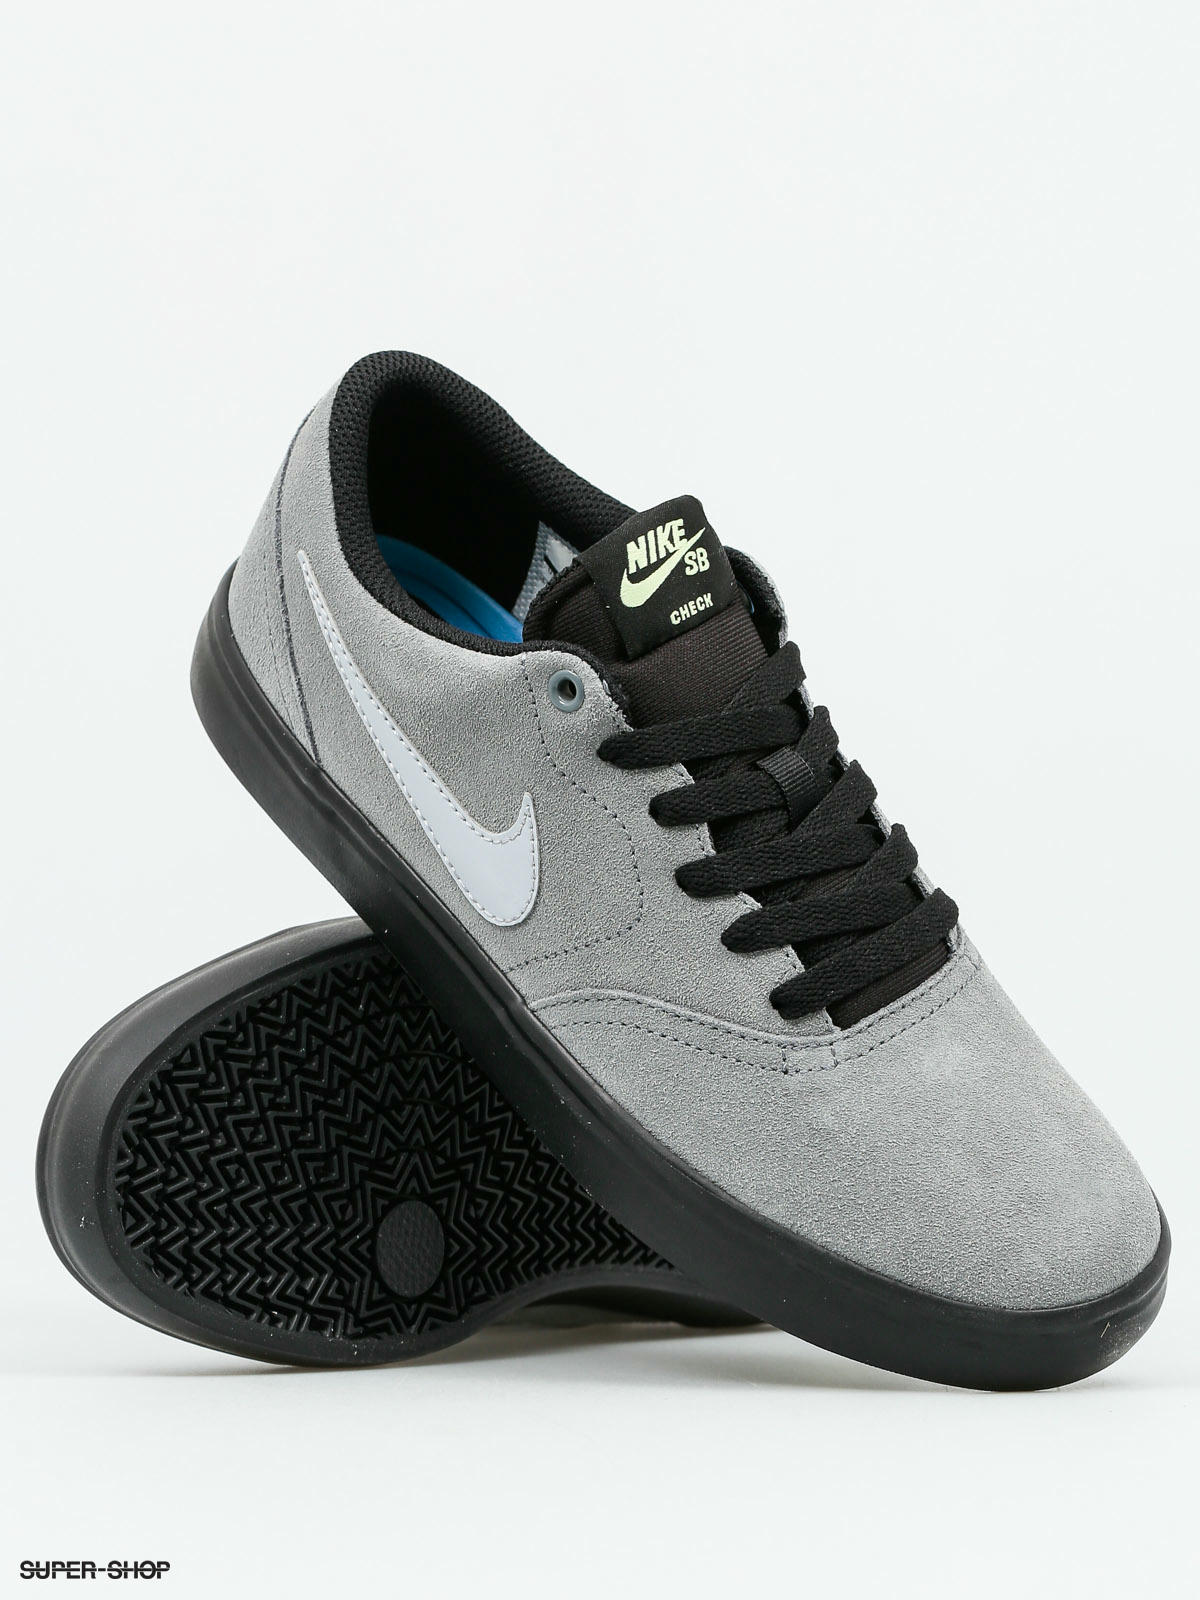 Origineel tabak Herhaal Nike SB Shoes Check Solar (cool grey/wolf grey black bare)